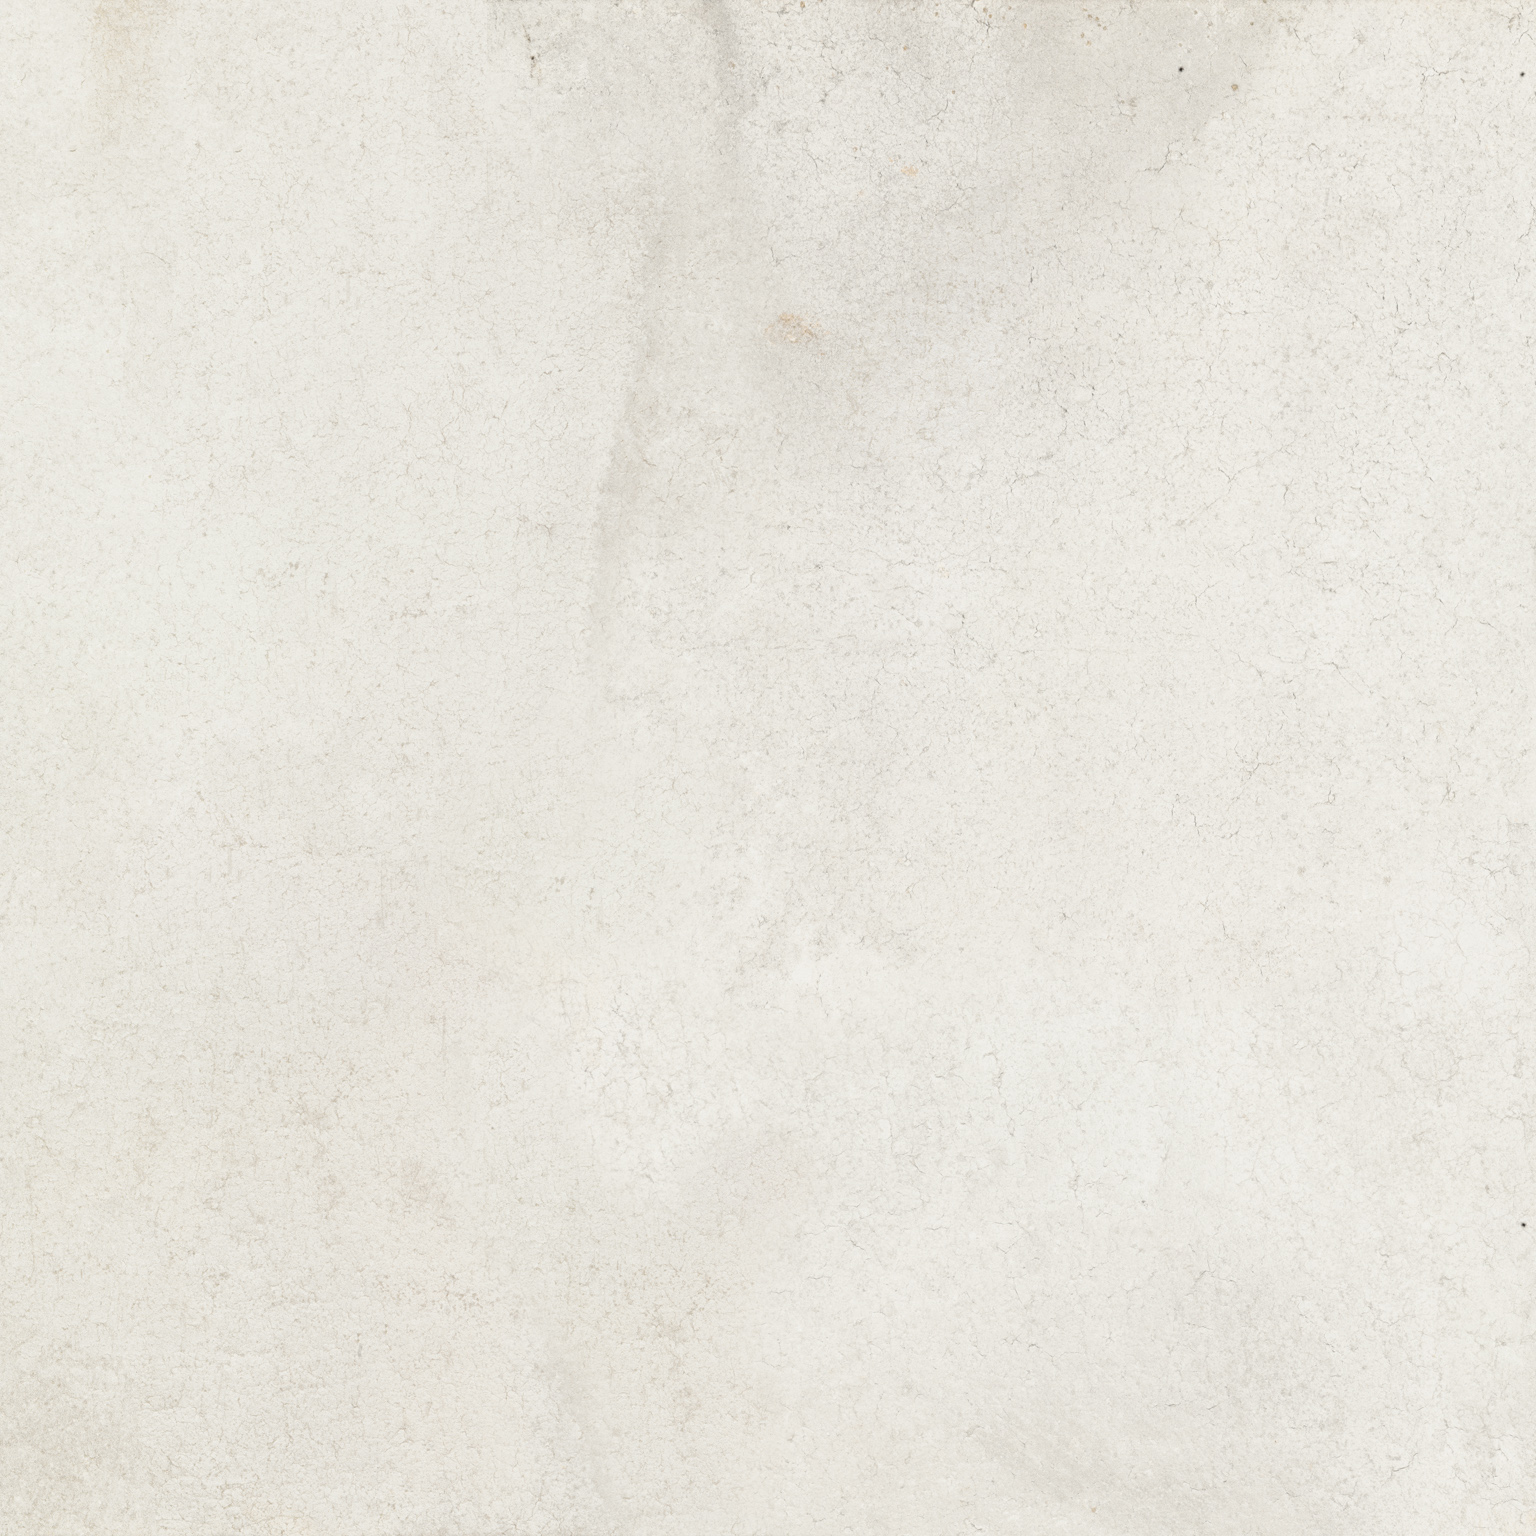 Lipari - Polished is a beige, white Italian porcelain tile.